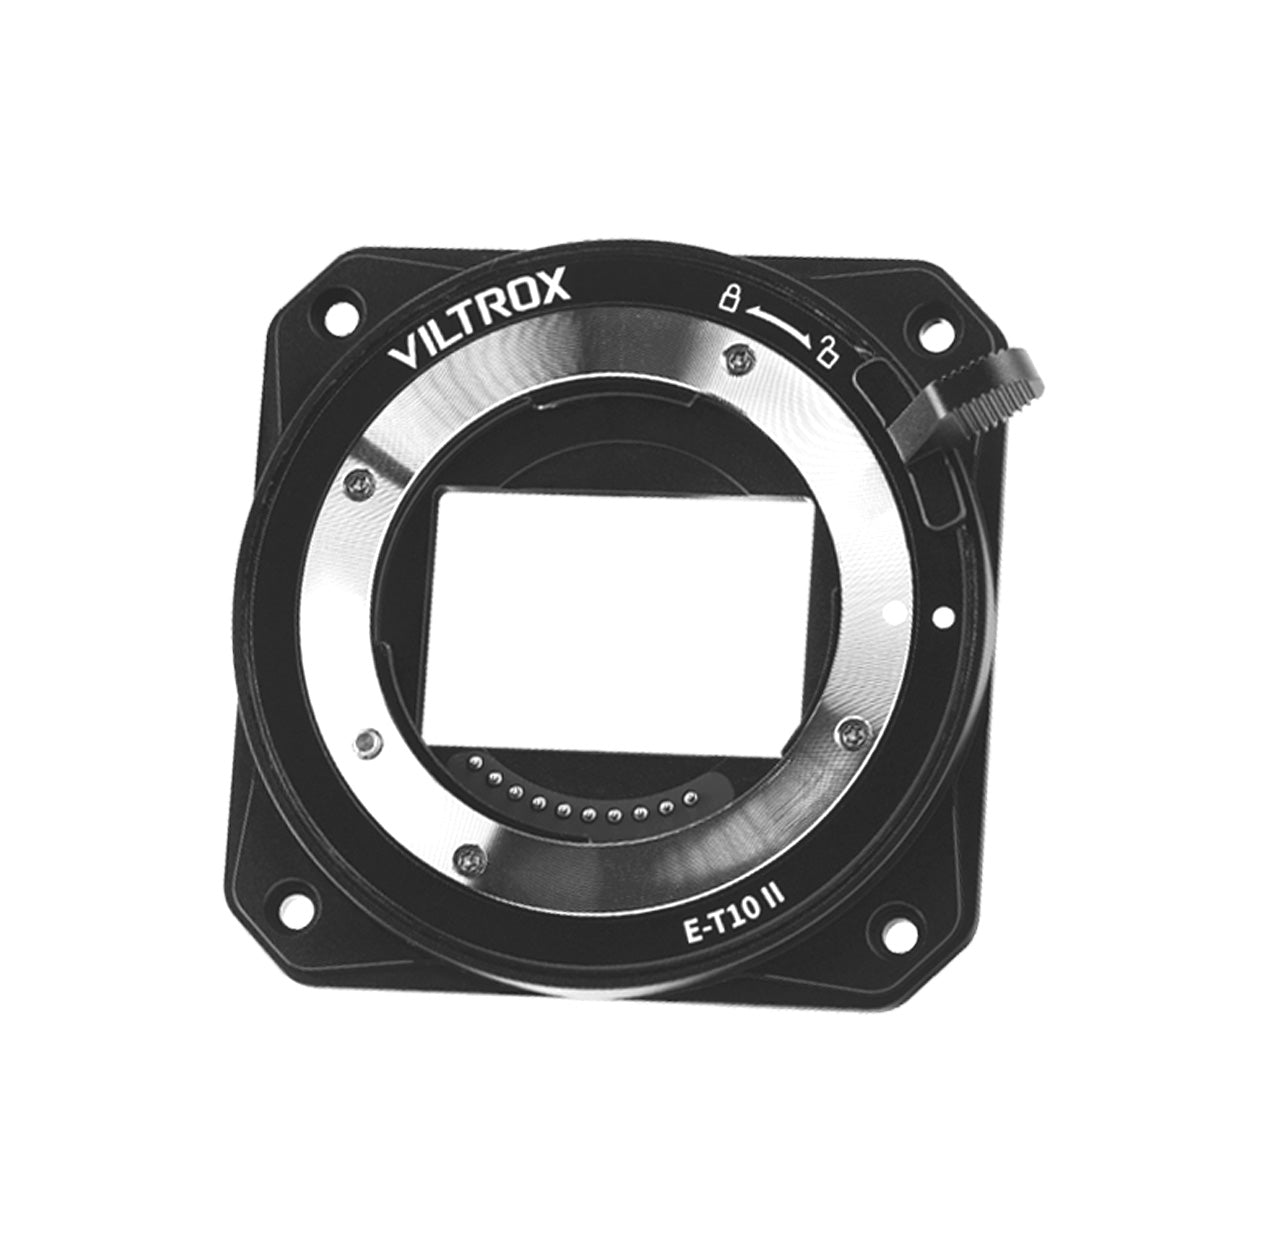 Viltrox E-T10 II AF Adapter Ring